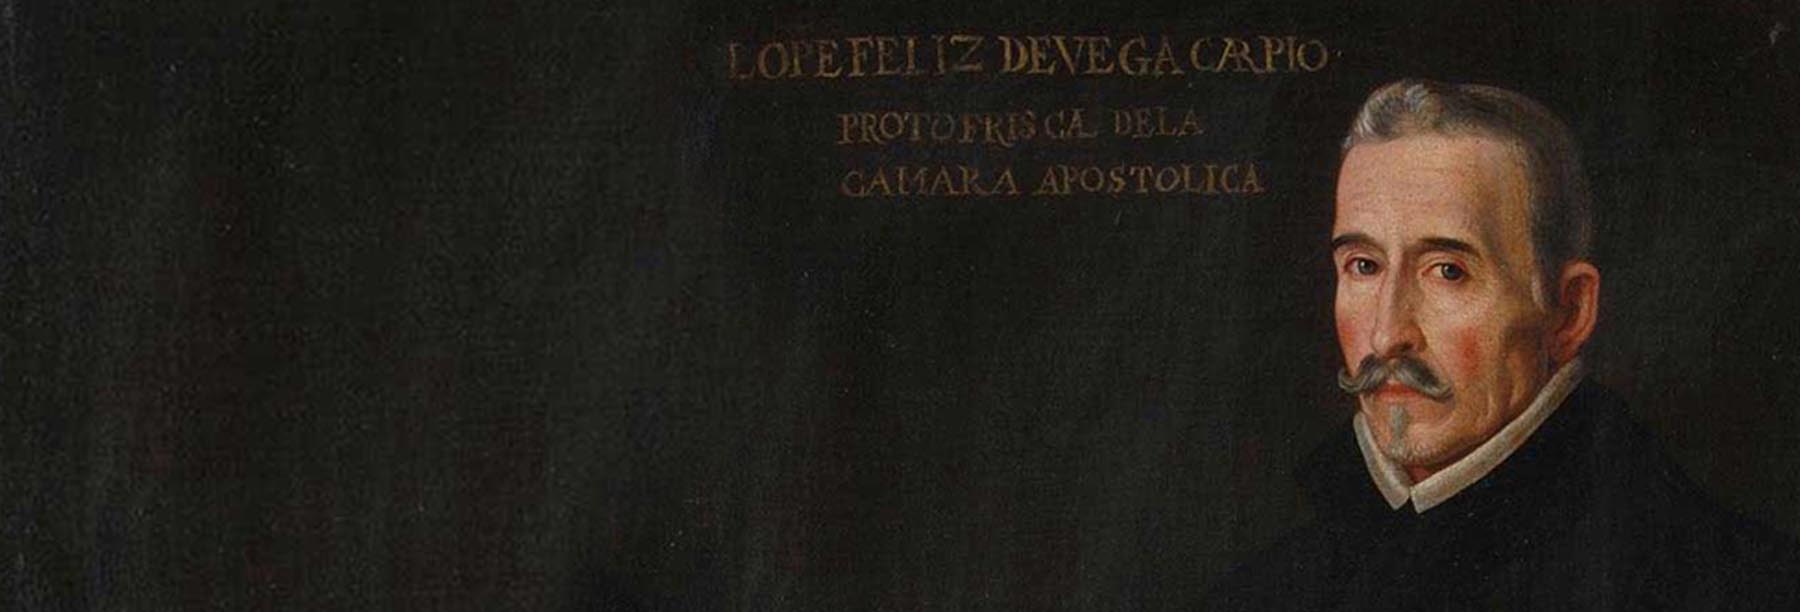 Complete Autos sacramentales by Lope de Vega